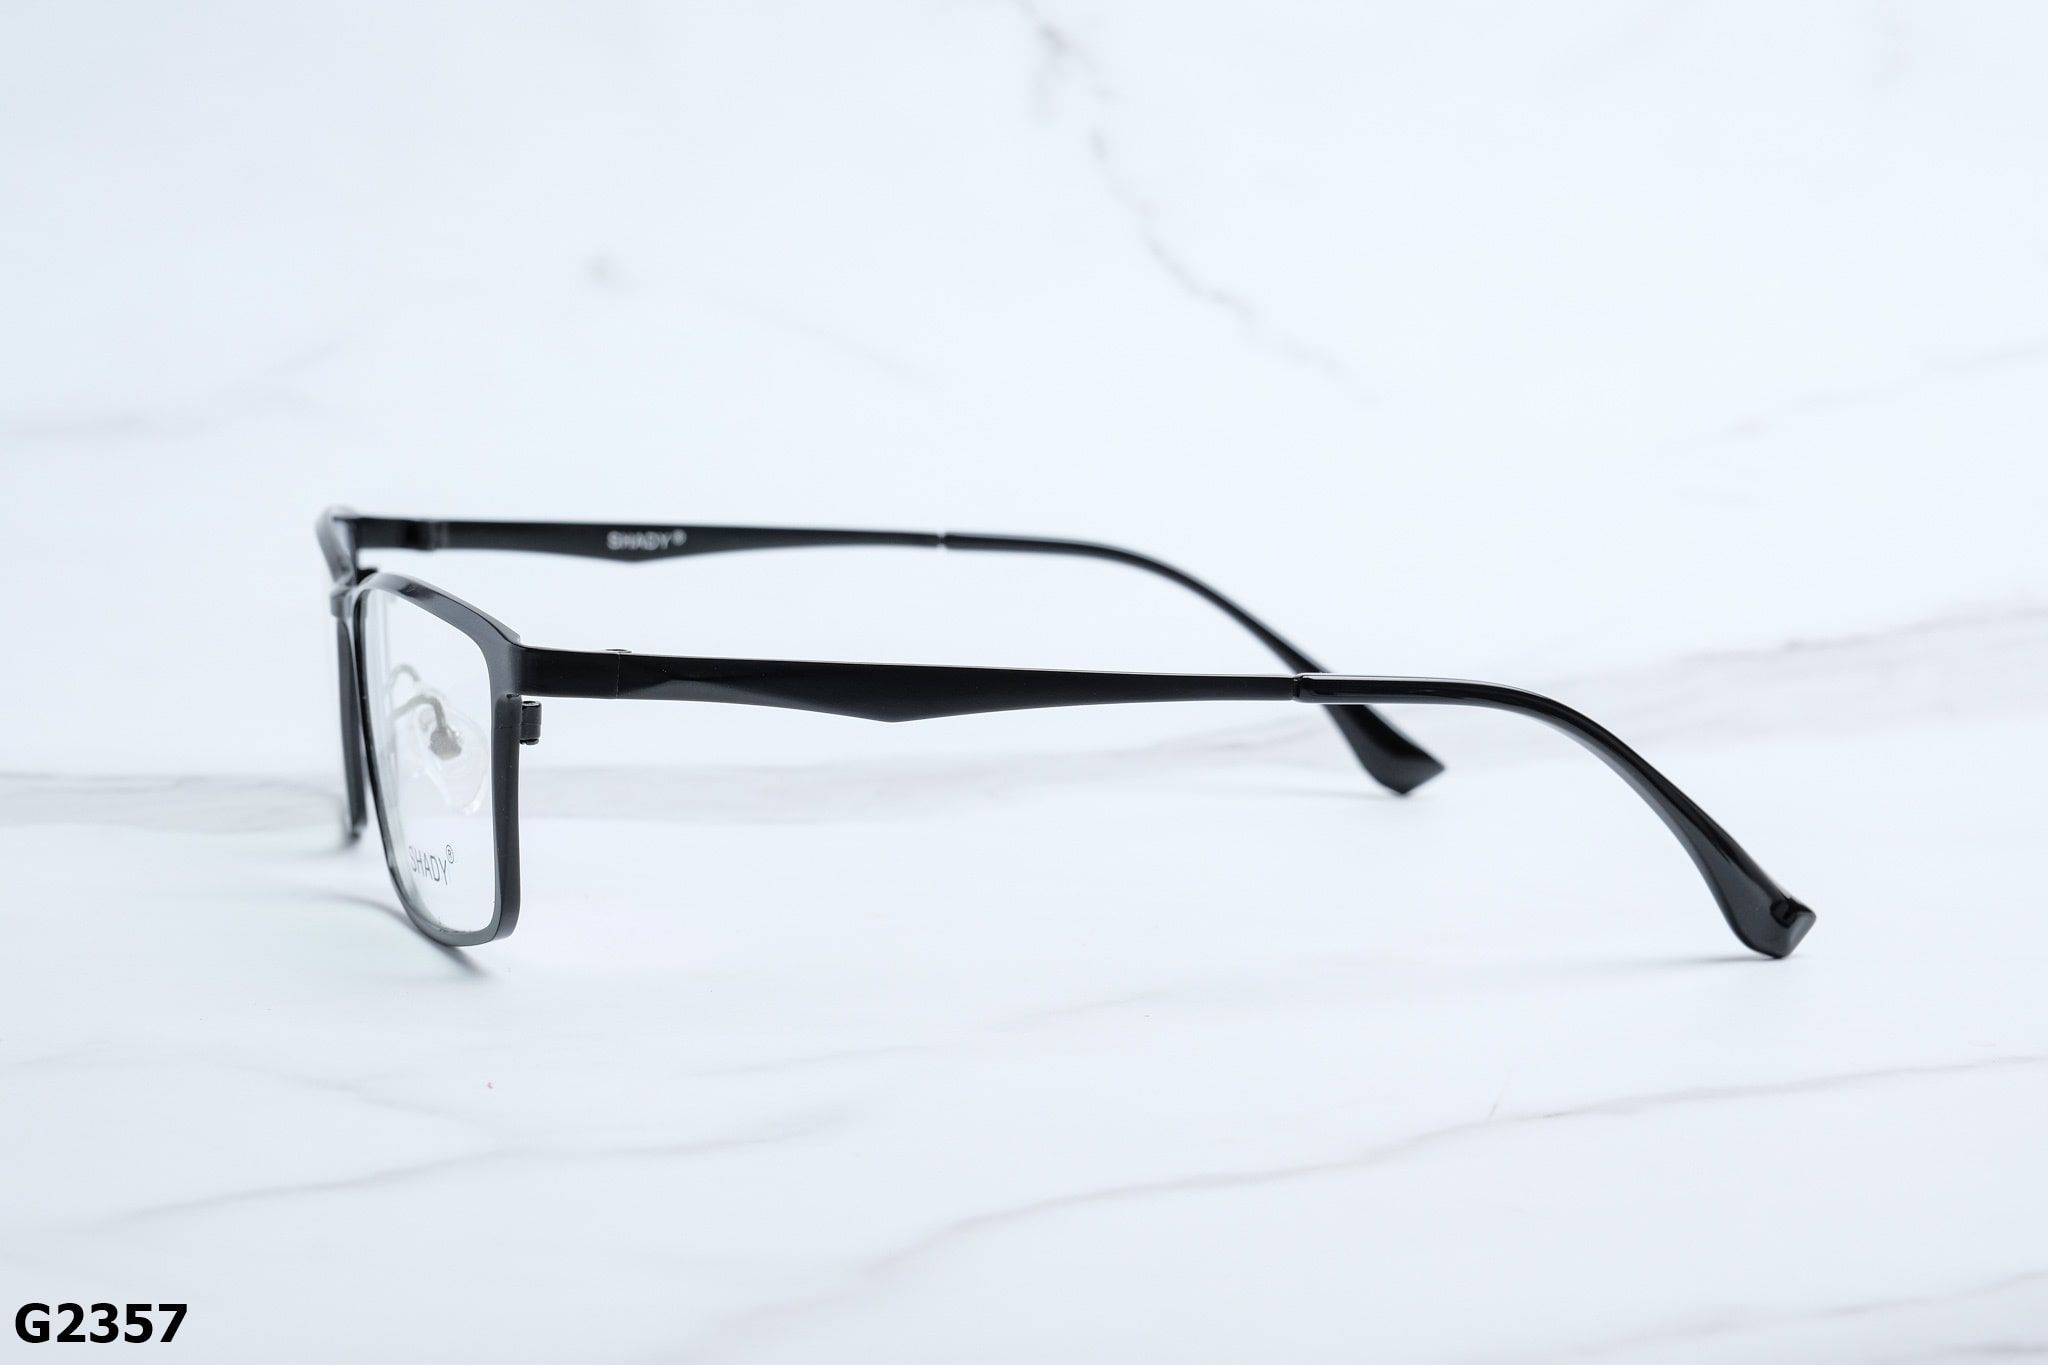  SHADY Eyewear - Glasses - G2357 